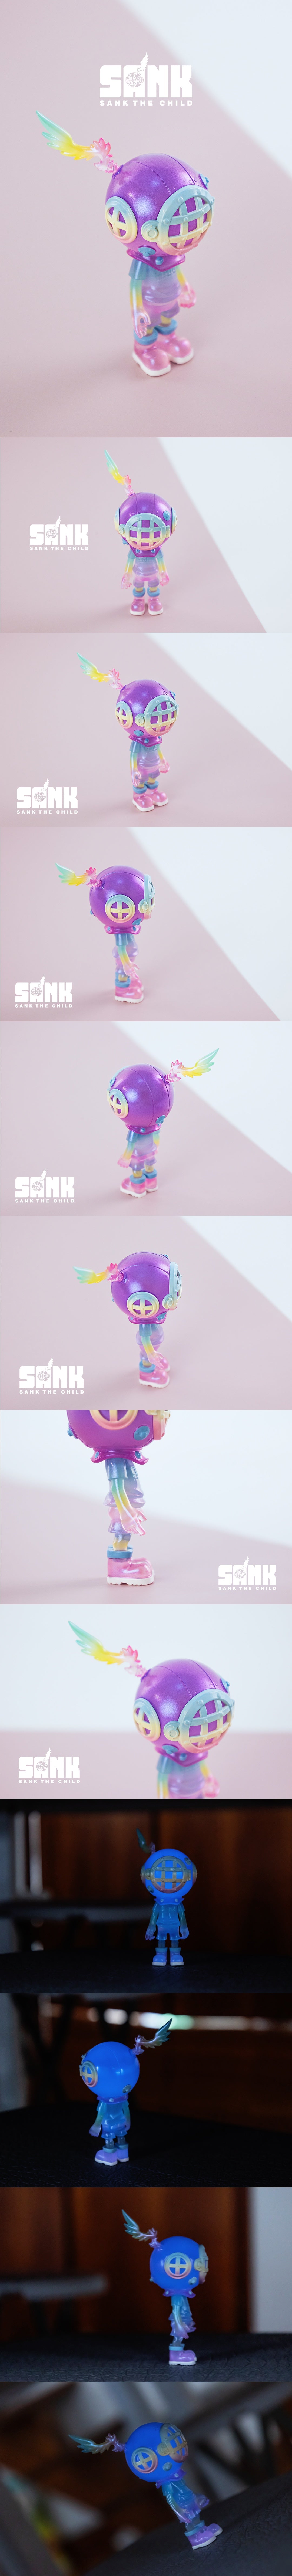 SANK TOYS Little Sank Spectrum Series Lavender (GID) Collectible Figurine